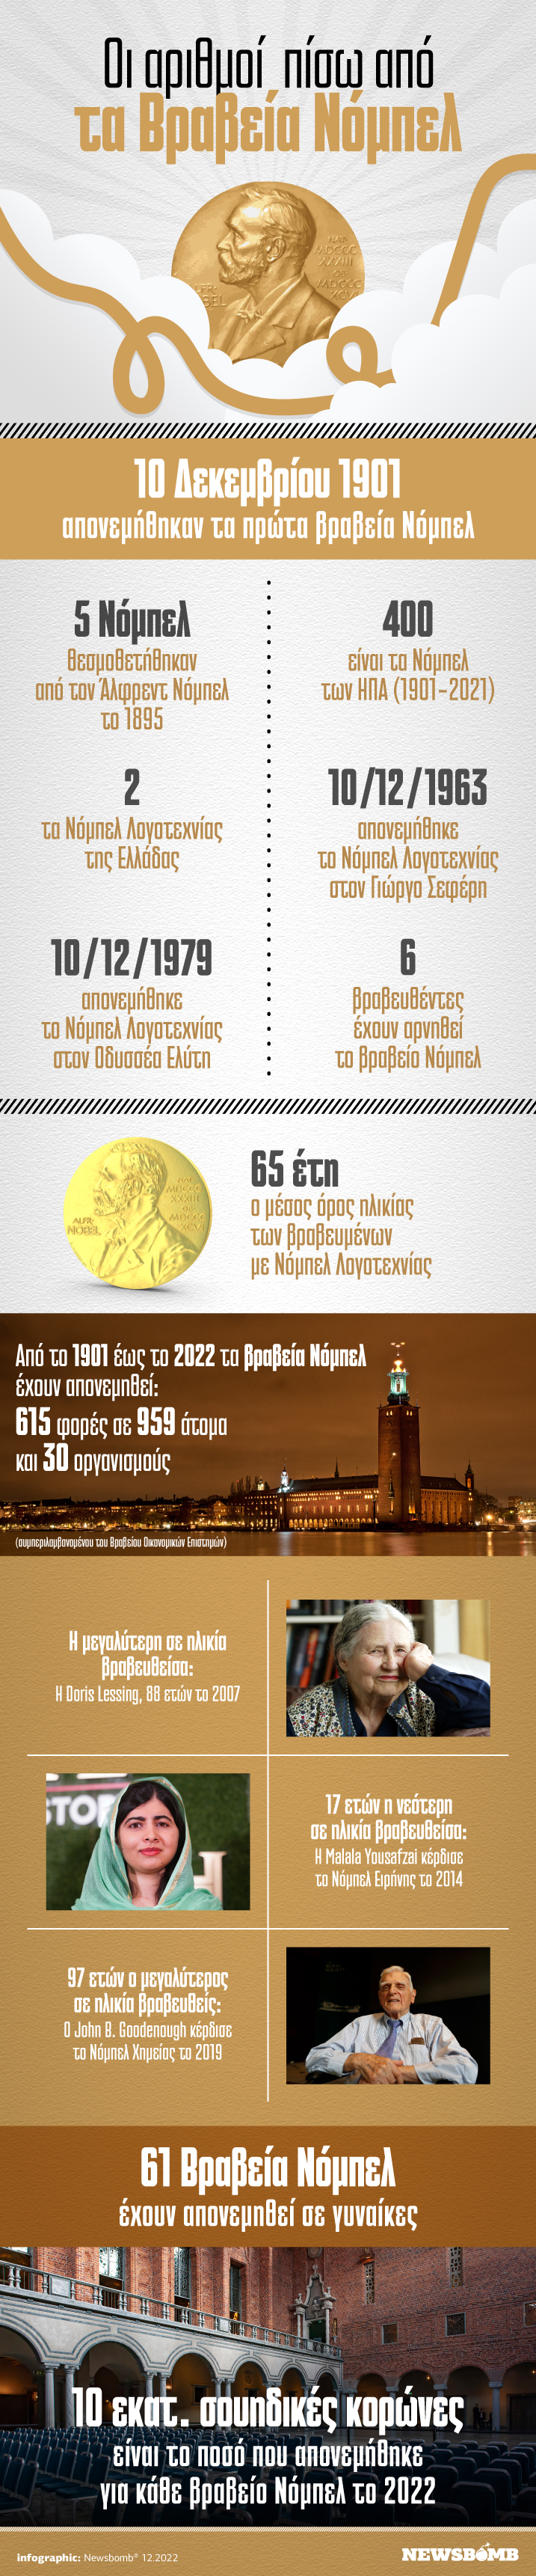 Infographic Nobel Prize